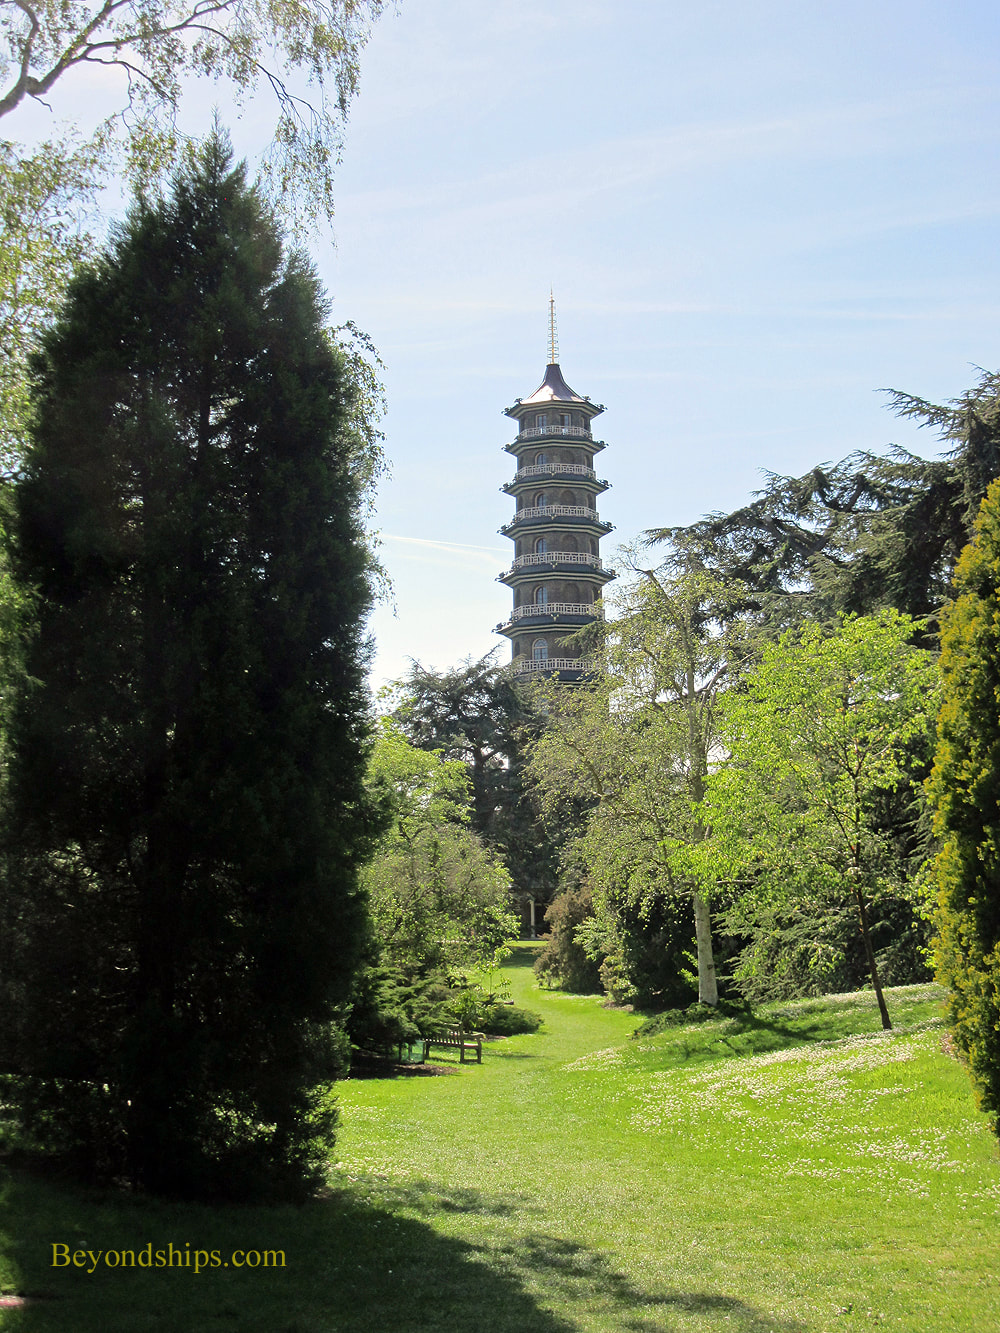 The Great Pagoda, Royal Botanical Gardens, Kew,